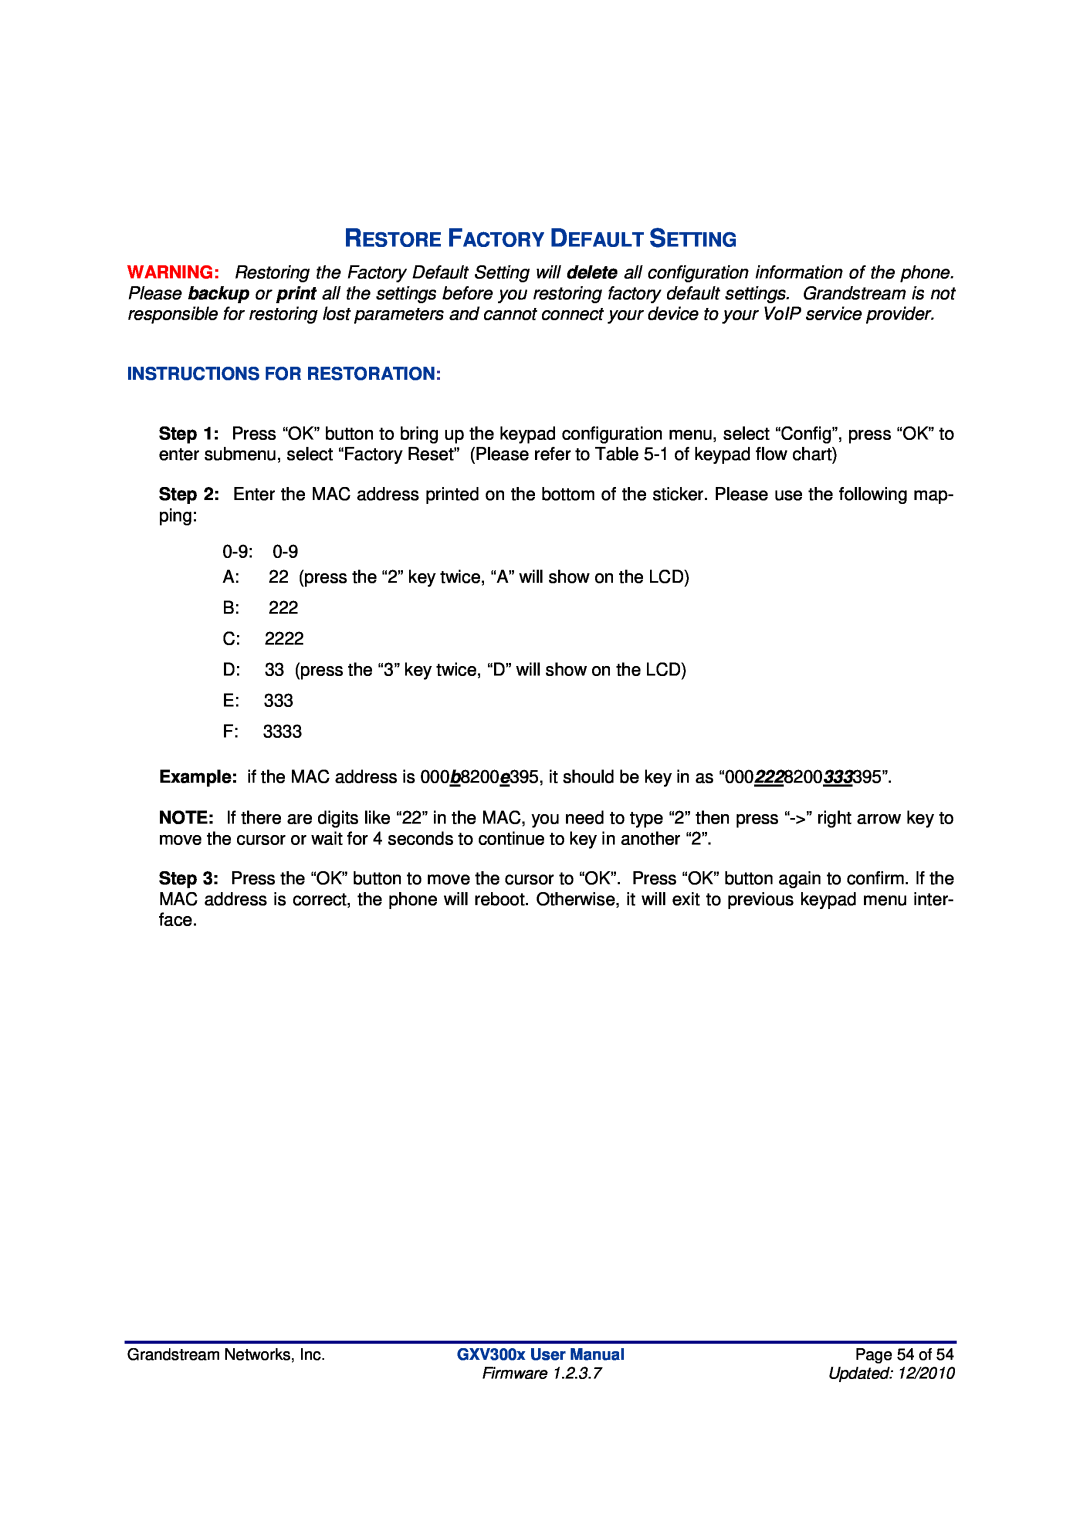 Grandstream Networks GXV300X manual Instructions For Restoration, Restore Factory Default Setting 